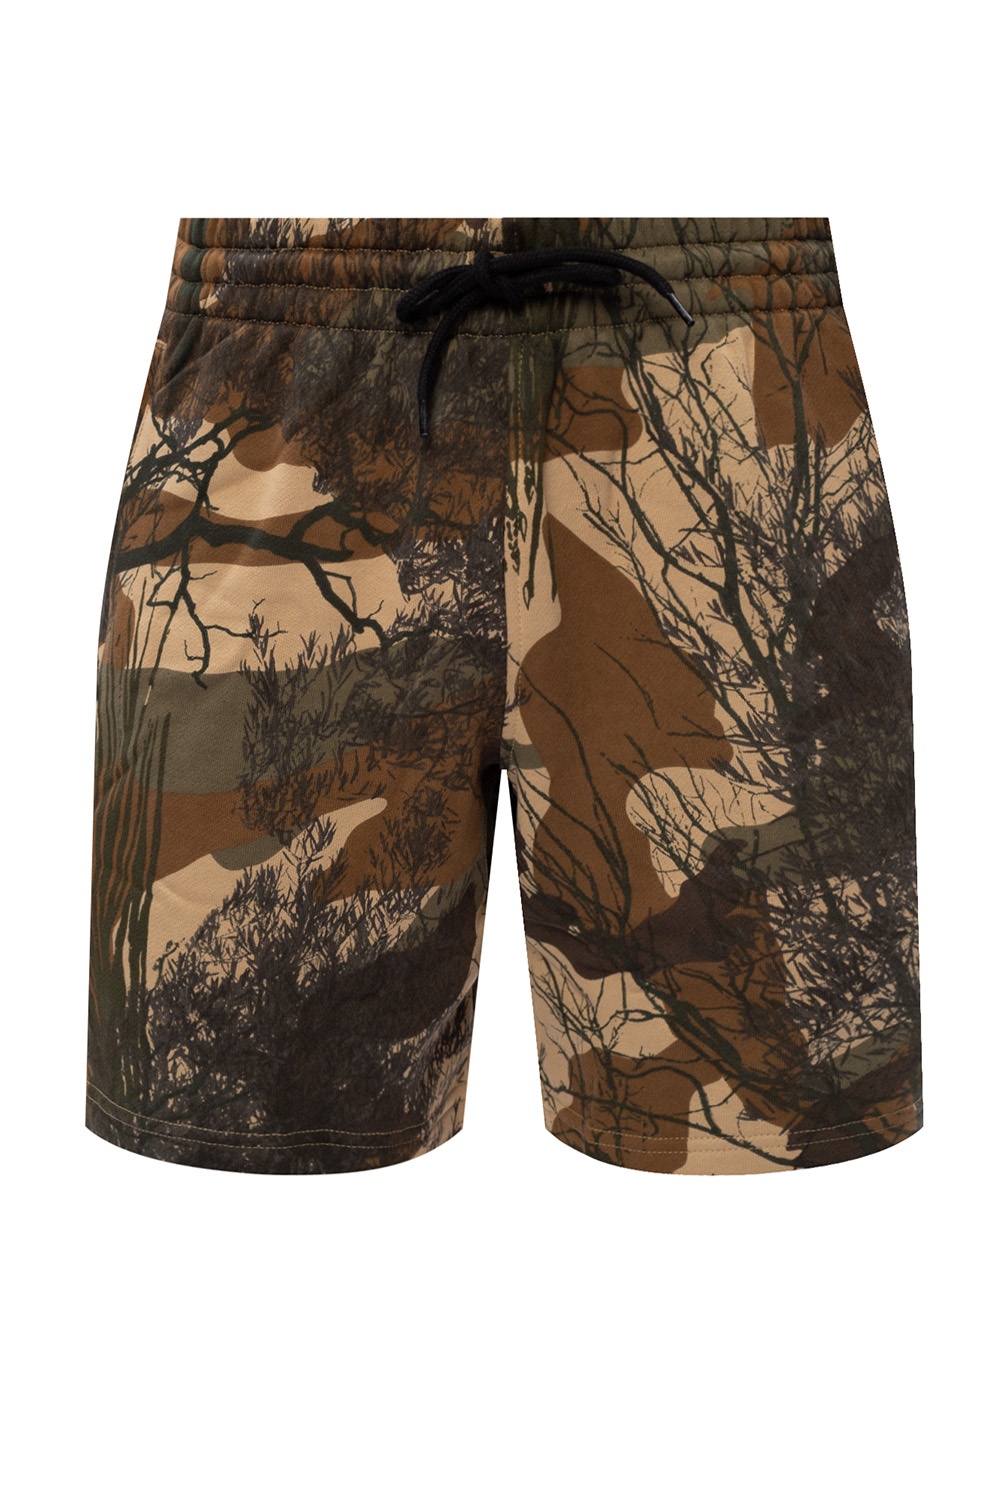 adidas patterned shorts